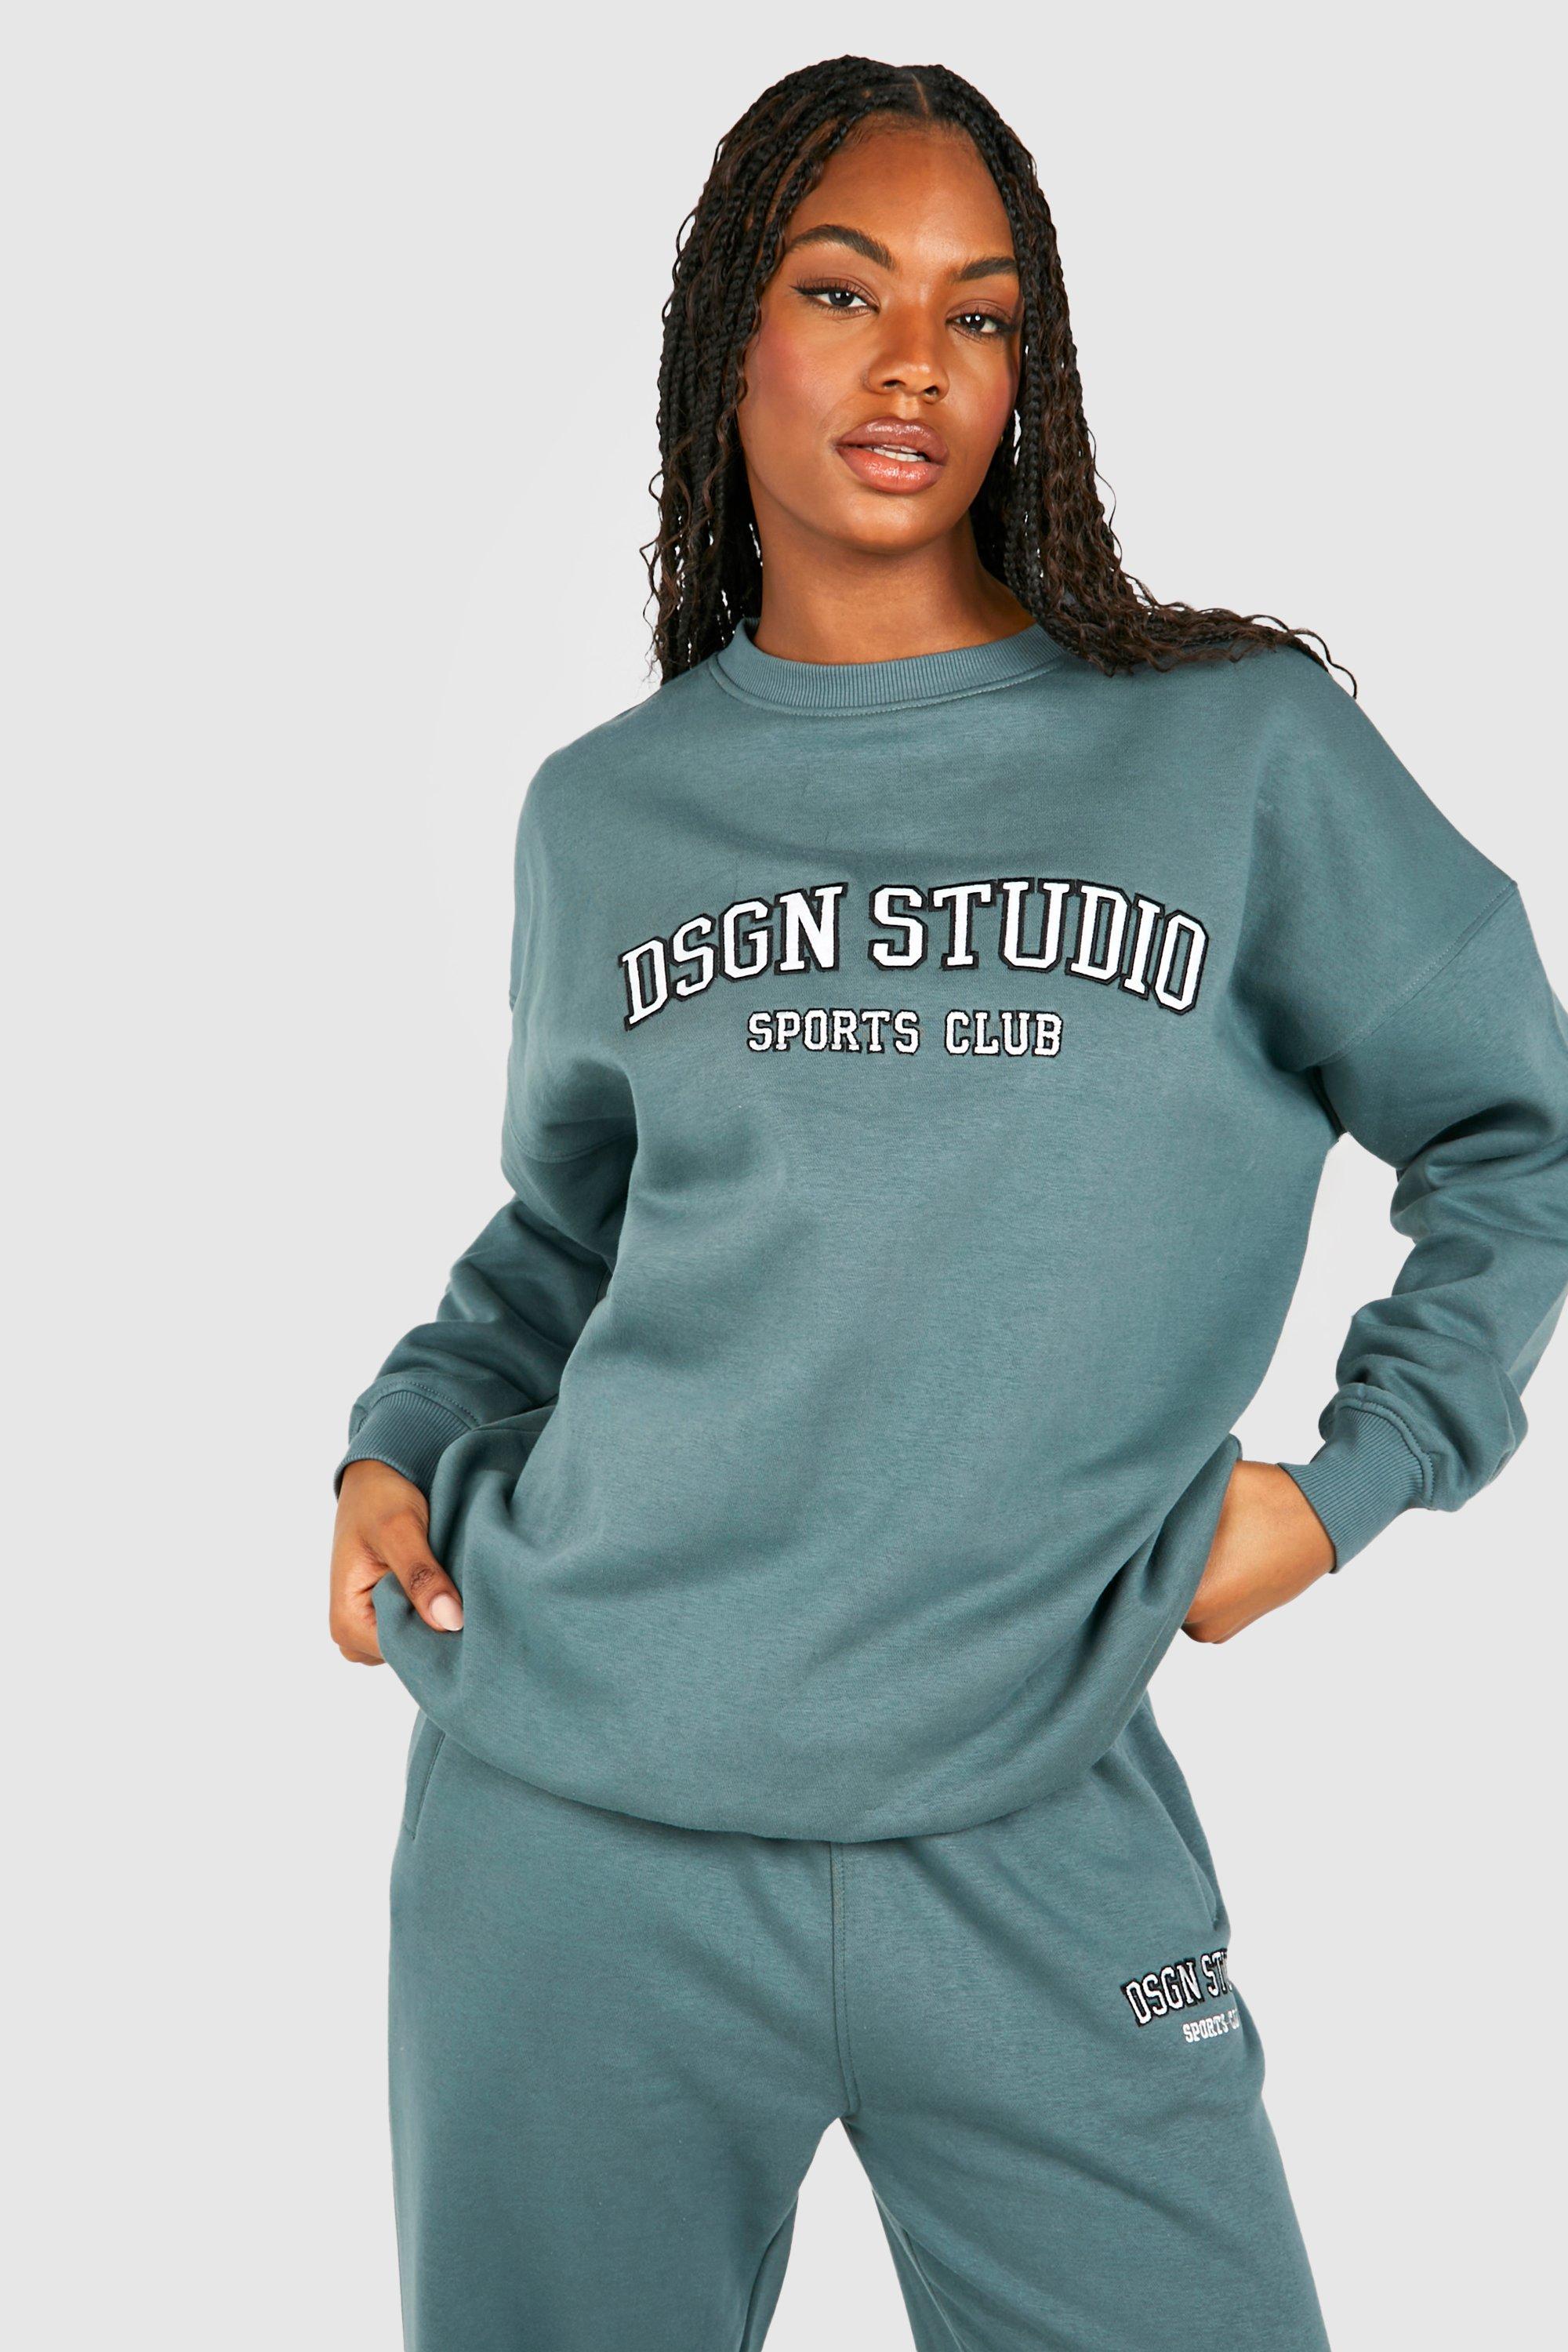 womens tall dsgn studio applique sweatshirt - green - 8, green